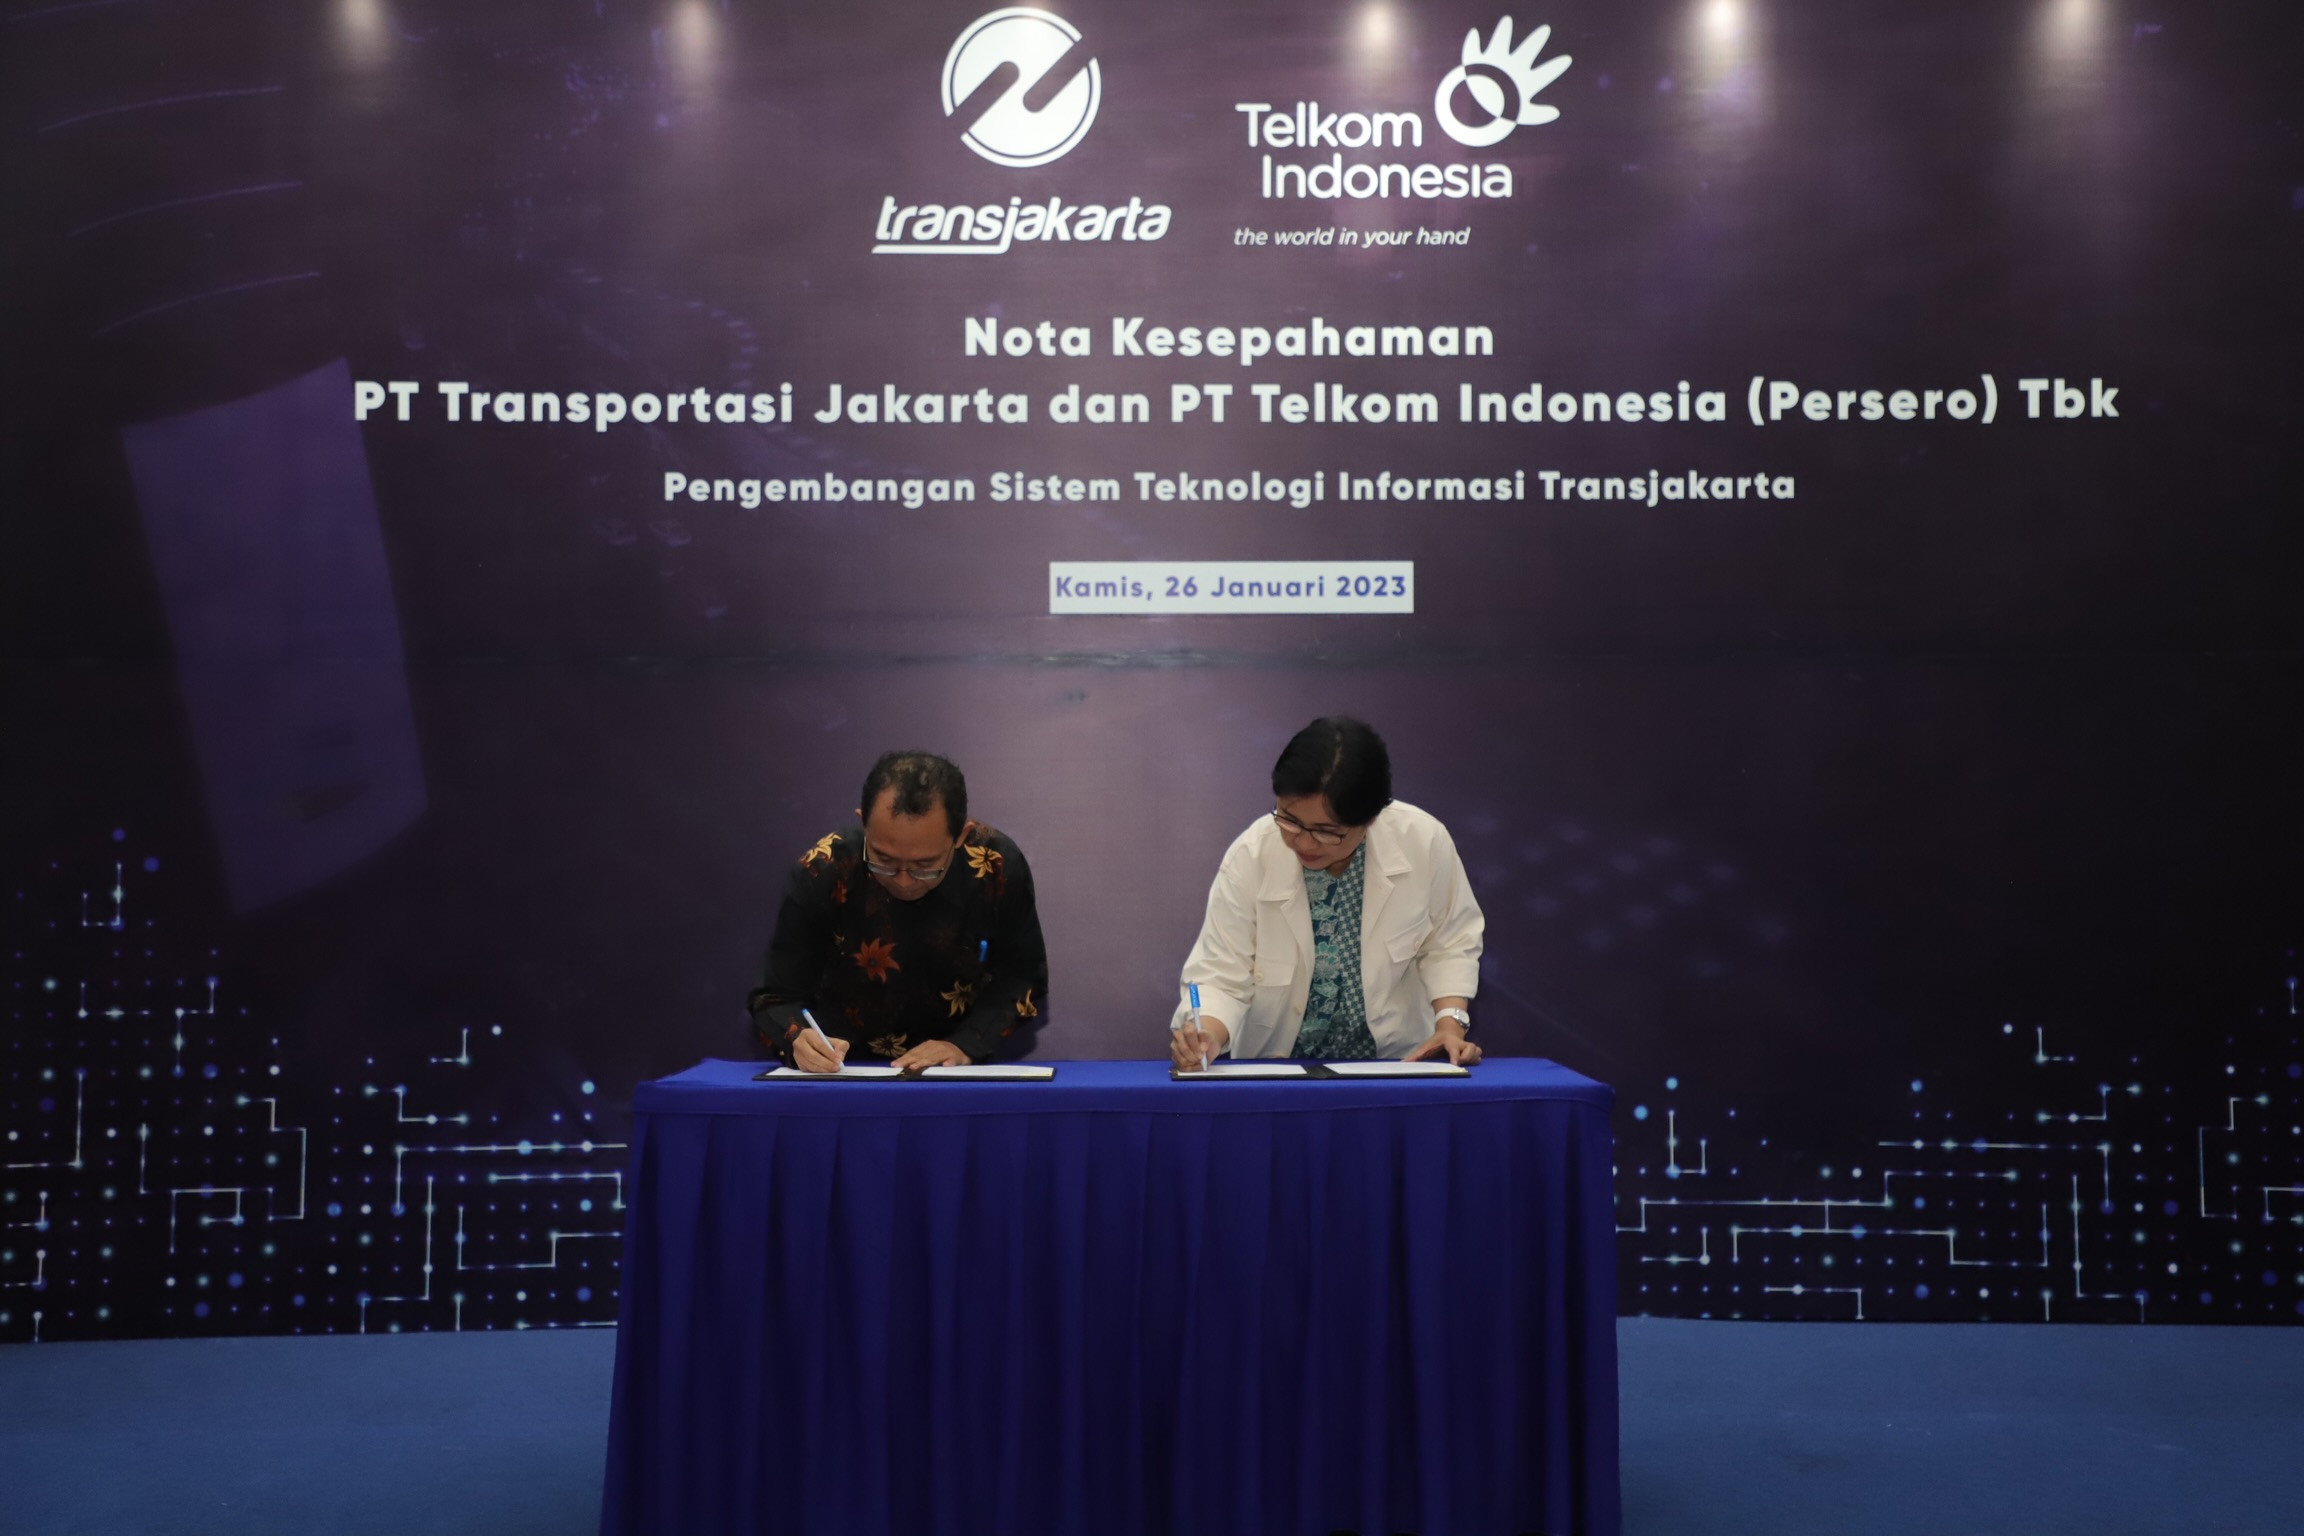 Kolaborasi Telkom dan Transjakarta kembangkan sistem TI